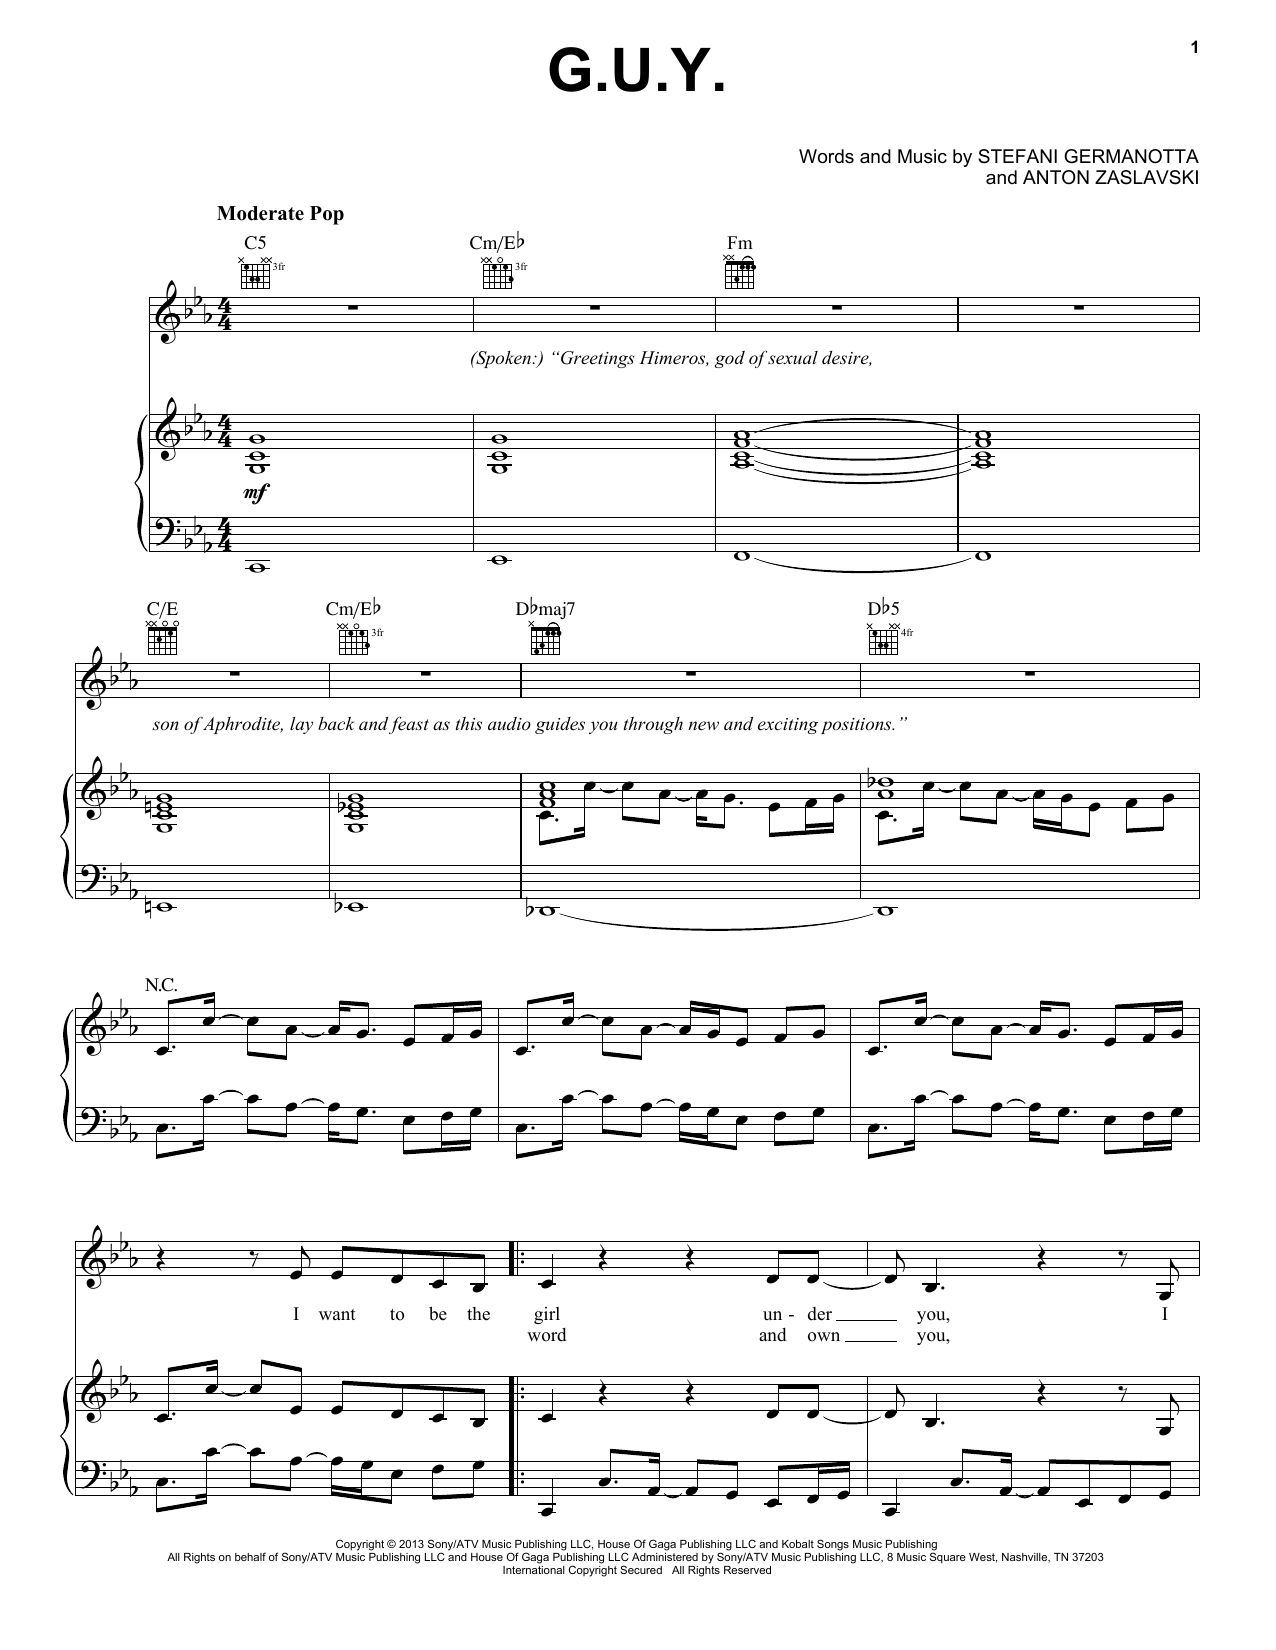 Lady Gaga G.U.Y. Sheet Music Notes & Chords for Easy Piano - Download or Print PDF